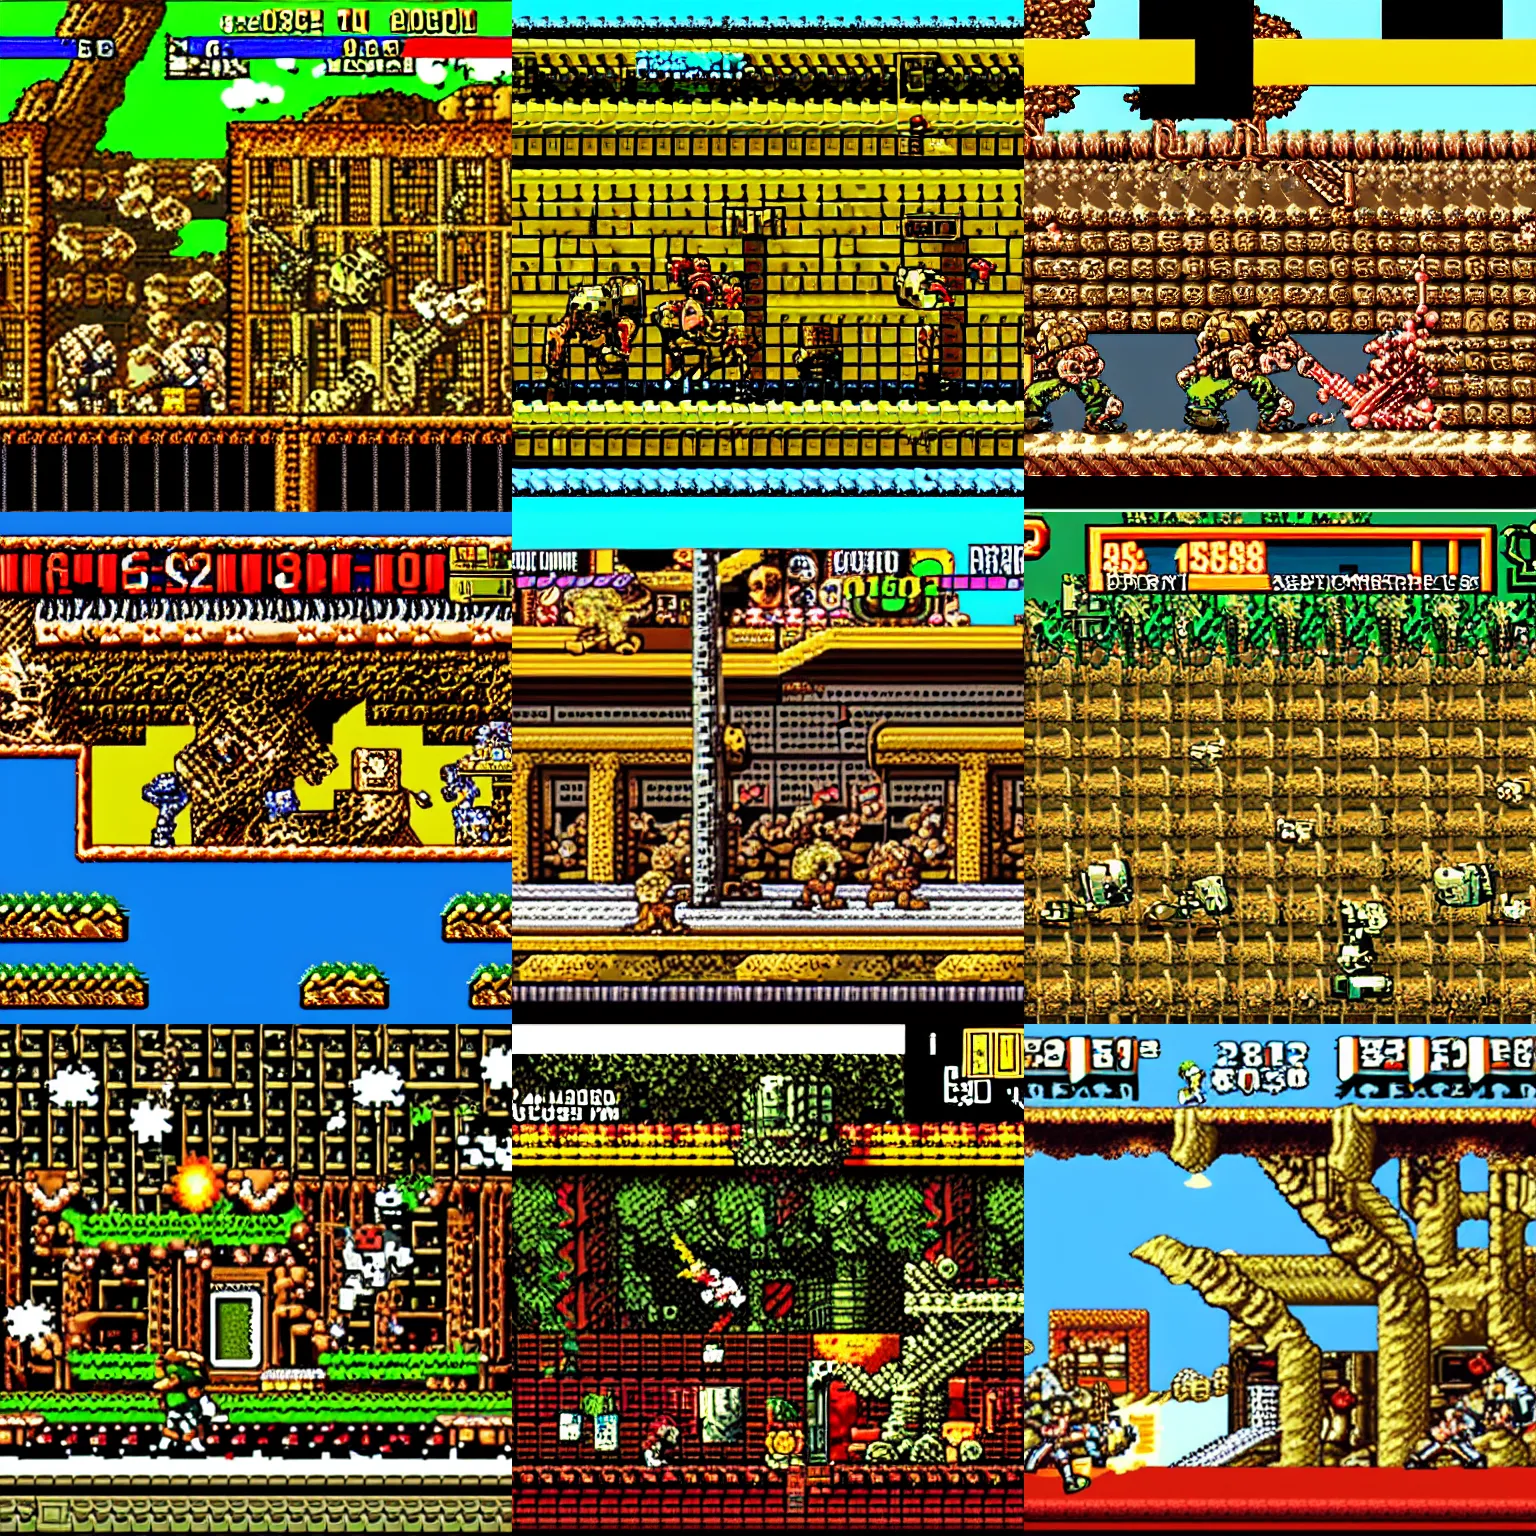 Prompt: Metal Slug arcade game screenshot, 32-bit pixel art